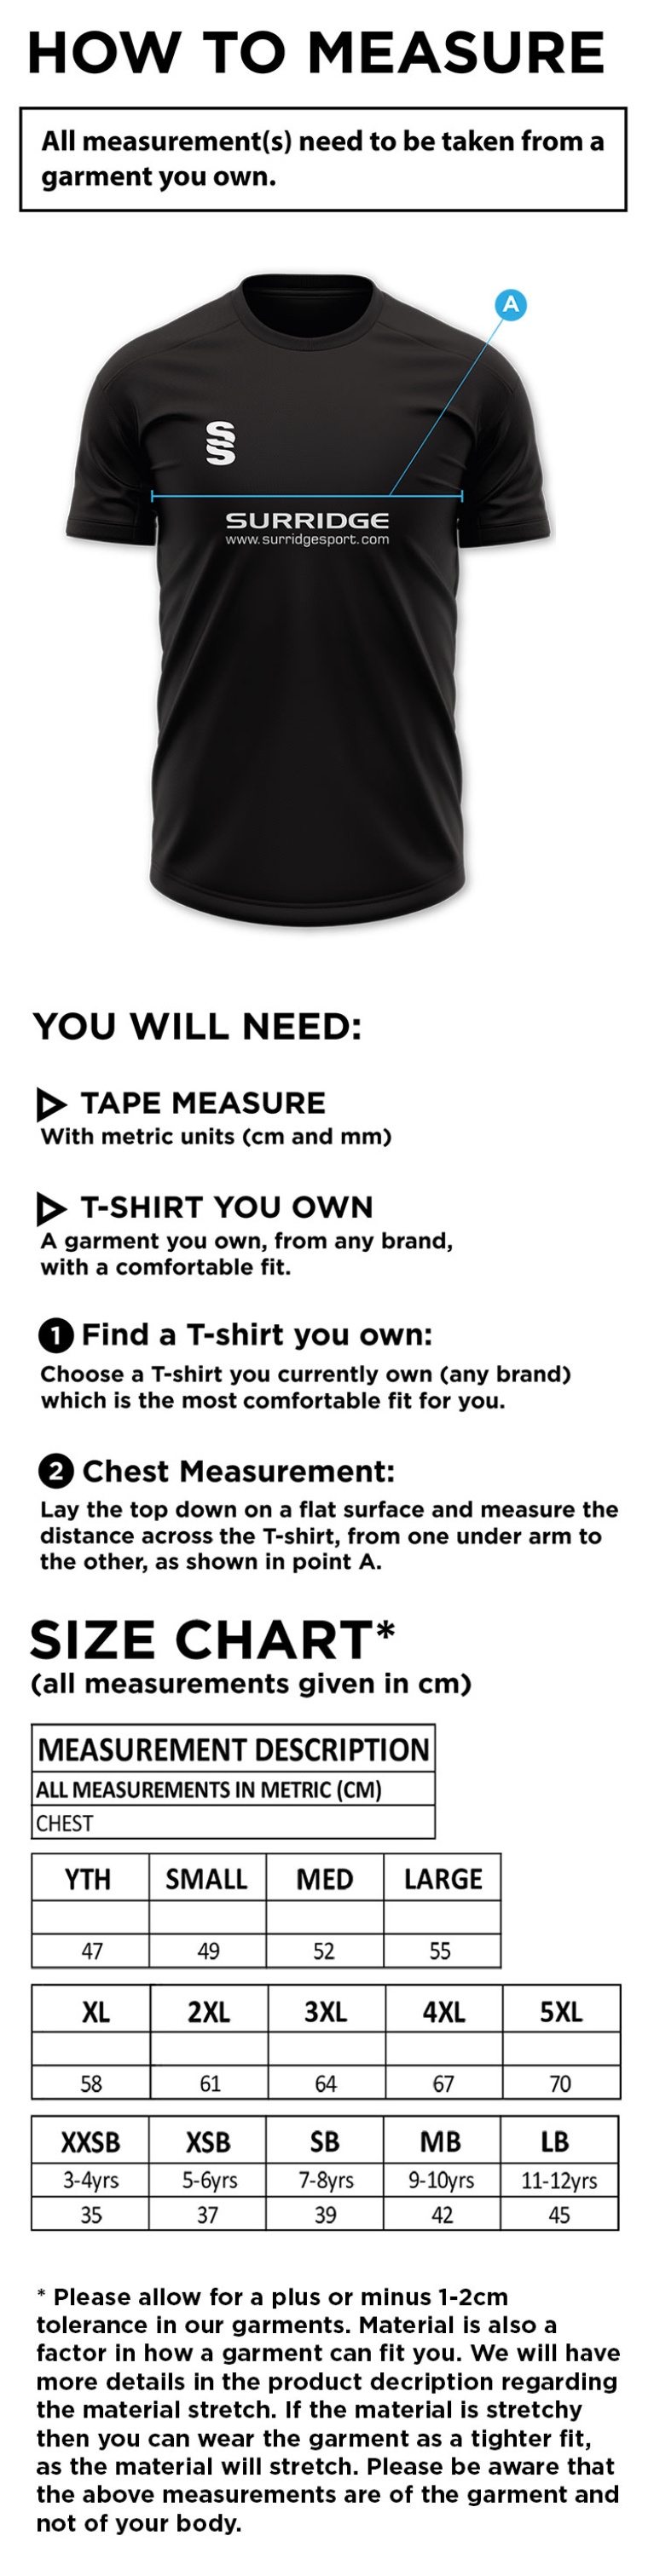 Shepley CC - Fuse Training Shirt - Junior - Size Guide